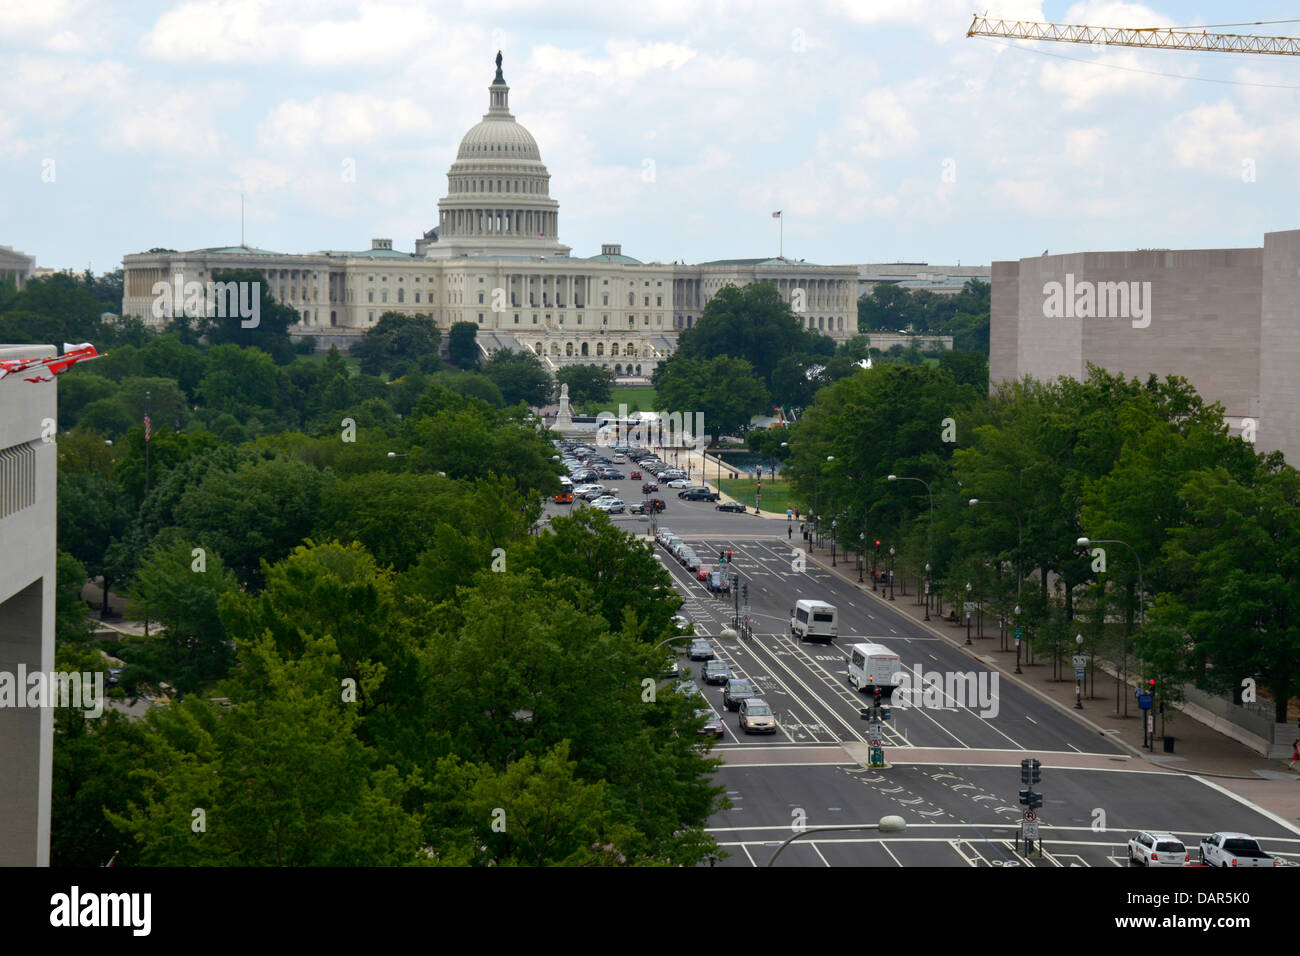 The United States Capitol in Washington, DC Stock Photo